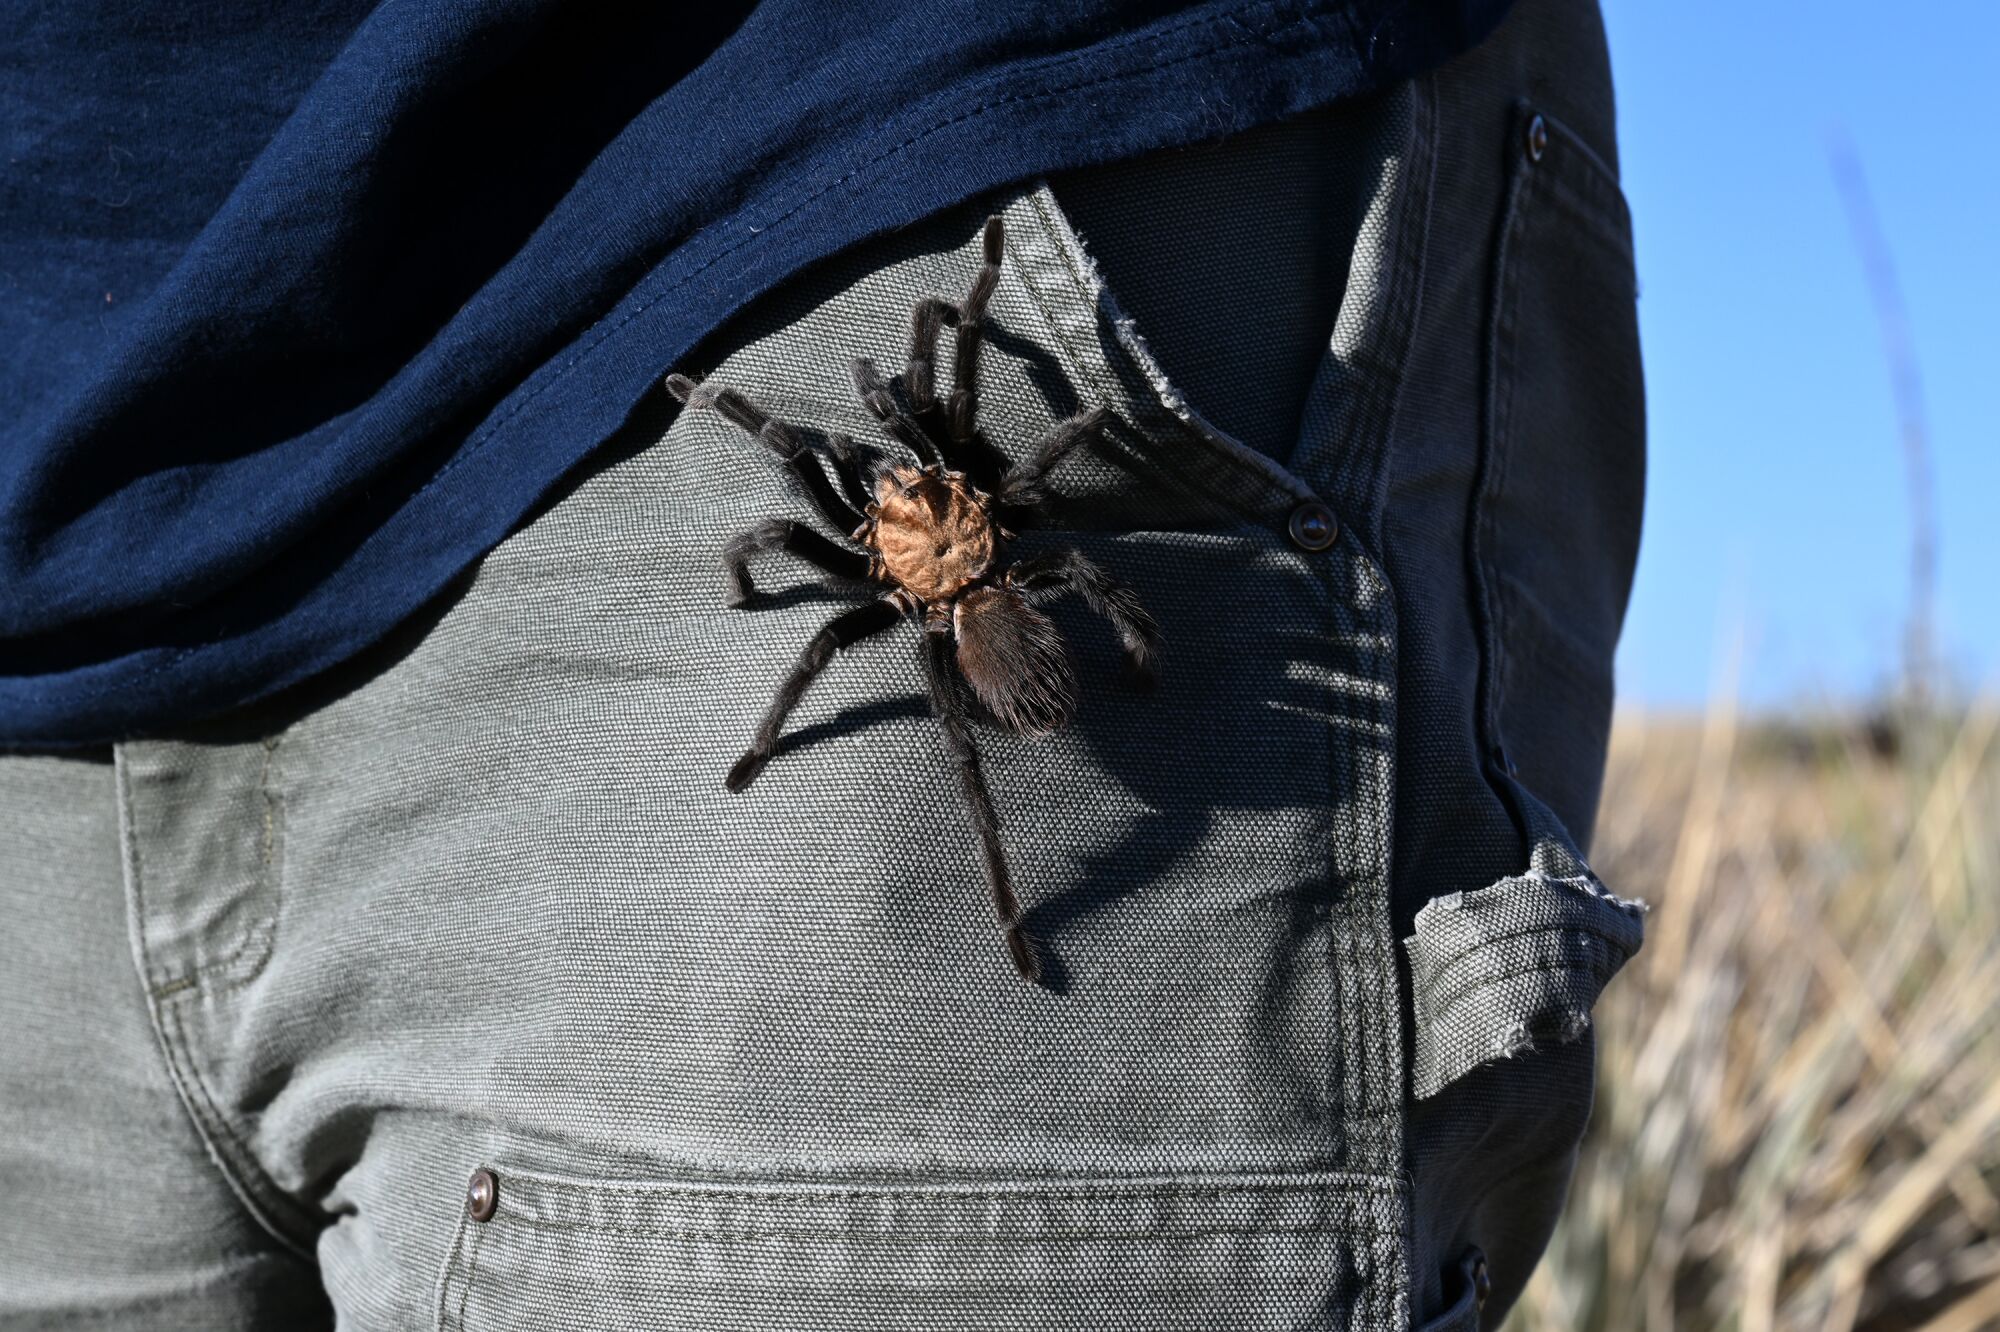 A male tarantula crawls up the pants of Rich Reading